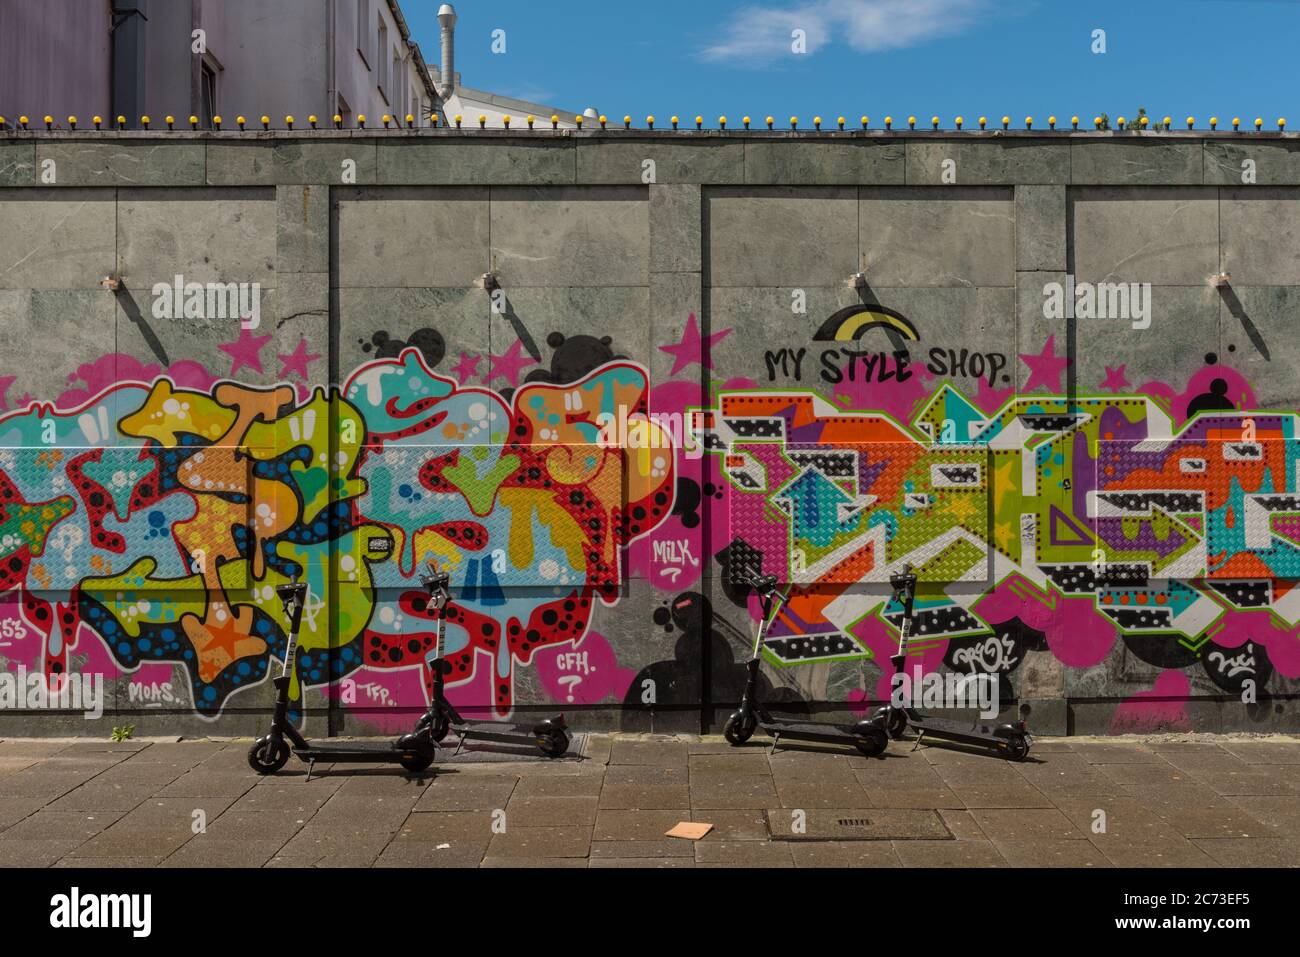 Wall with graffiti, street art in St. Pauli, Hamburg, Germany Stock Photo